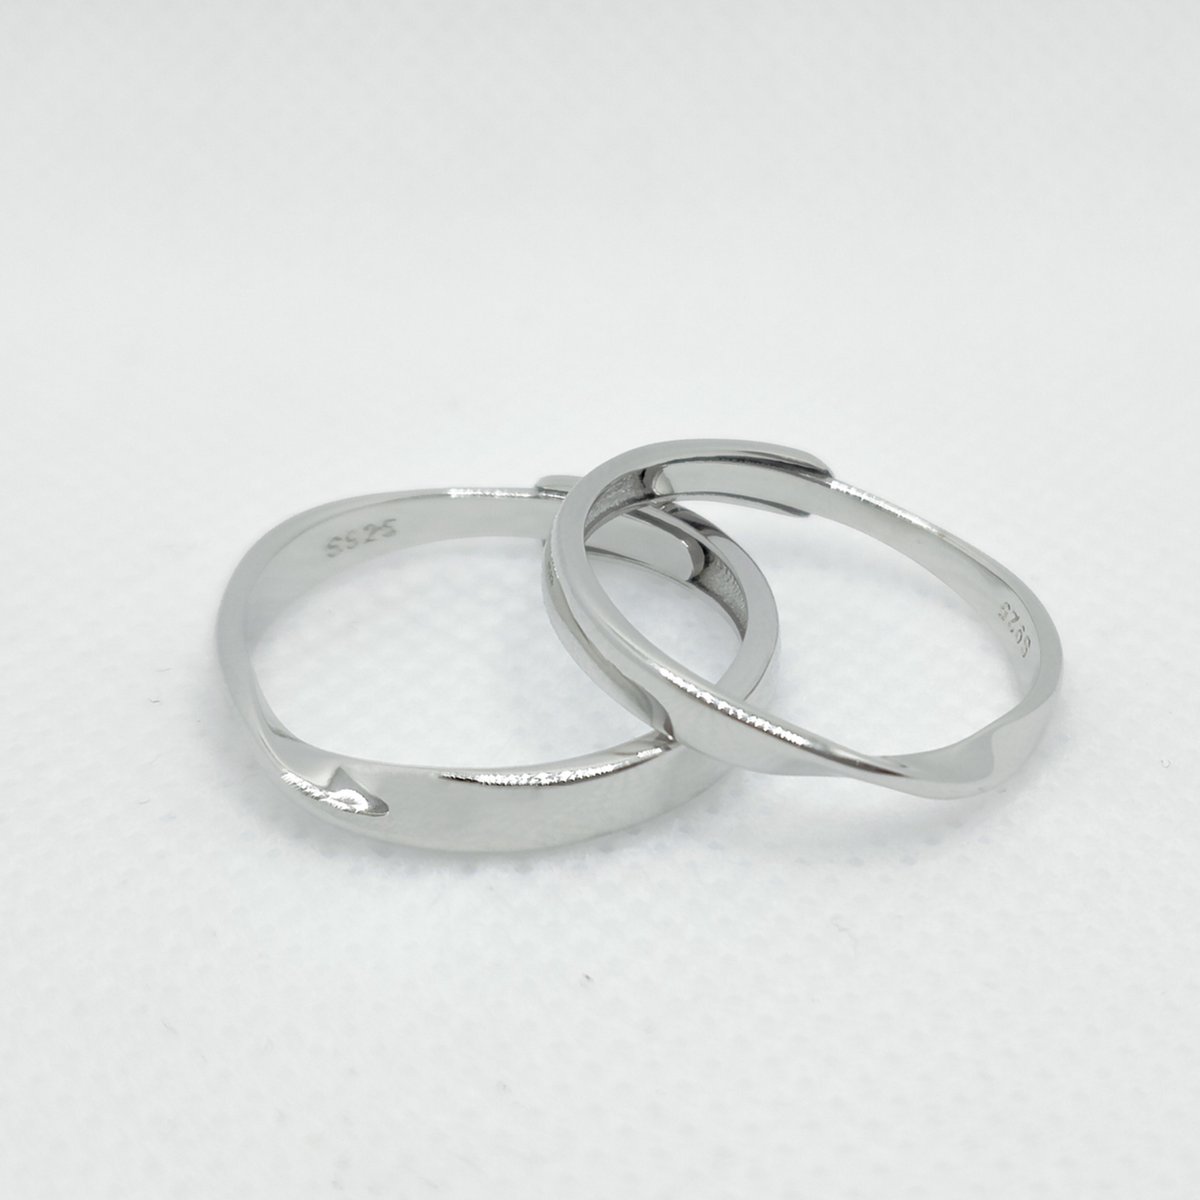 CouplesPicks gedraaide wave ring set | belofte ring | 925 zilver | dames ring | heren ring | zilveren ringen set | verstelbare ringen | verlovingsringen | vriendschapsringen | cadeau voor vriend of vriendin | matchend ringen set